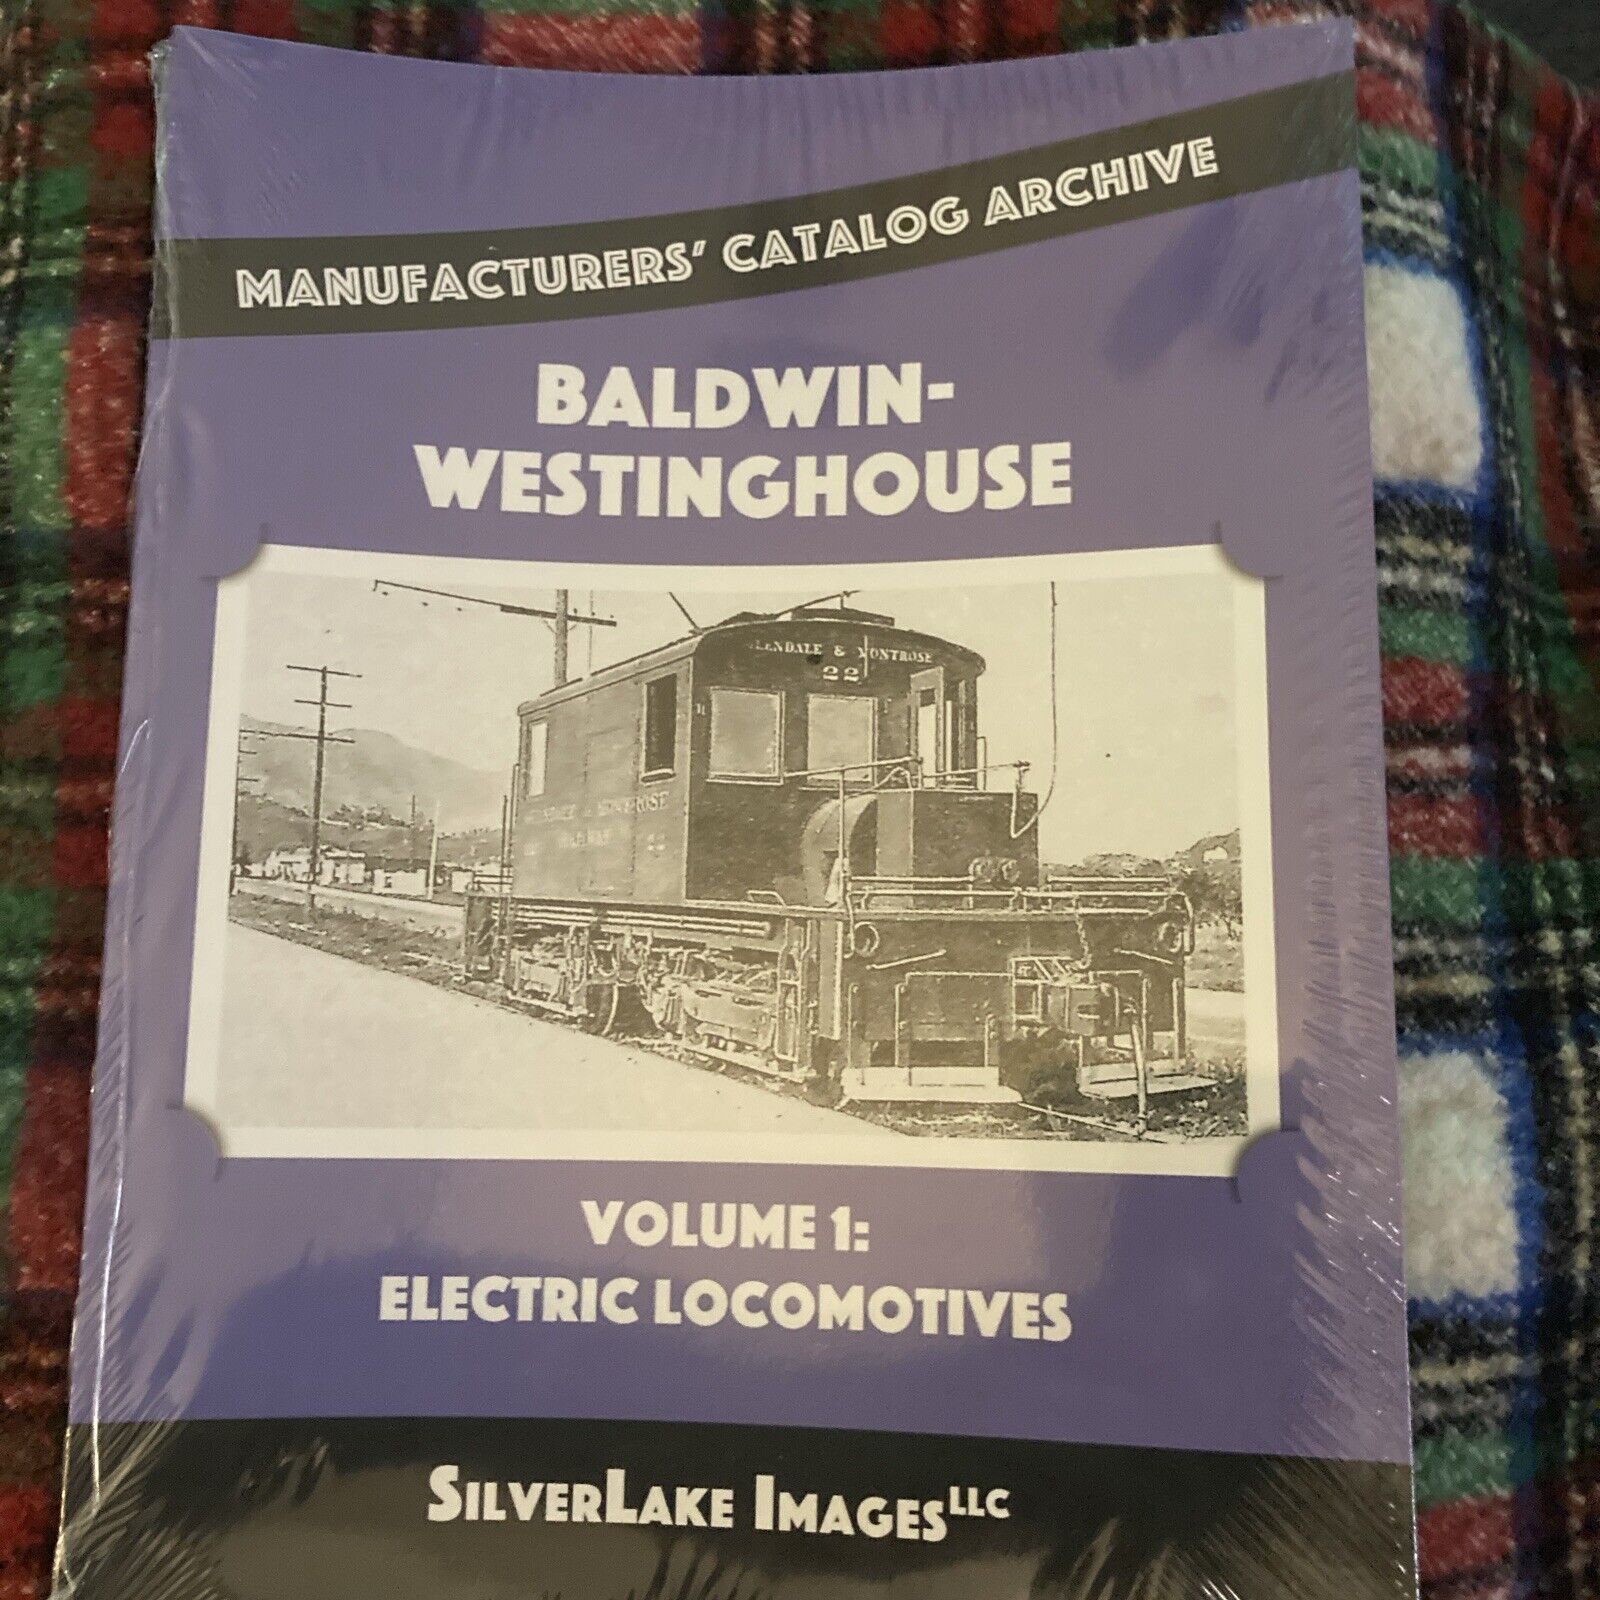 Manufacturers\' Catalog Archive - Baldwin-Westinghouse Electric Locomotives Vol.1